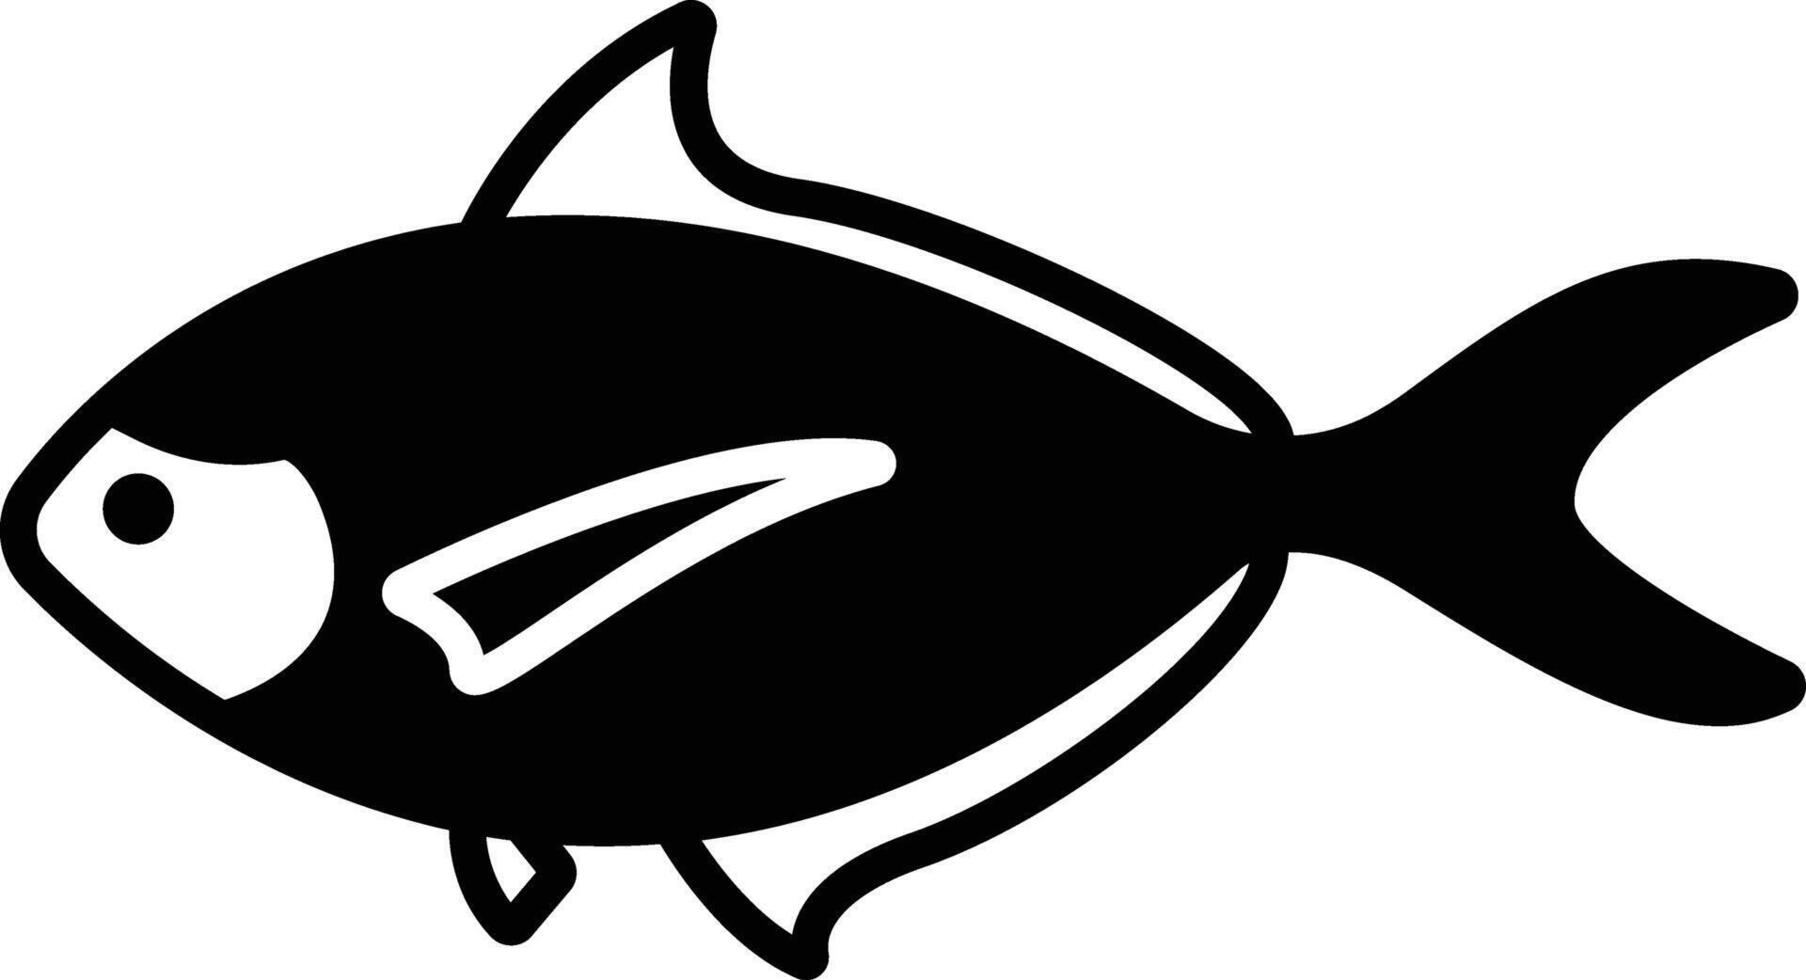 Sickle pomfret Fish glyph and line vector illustration